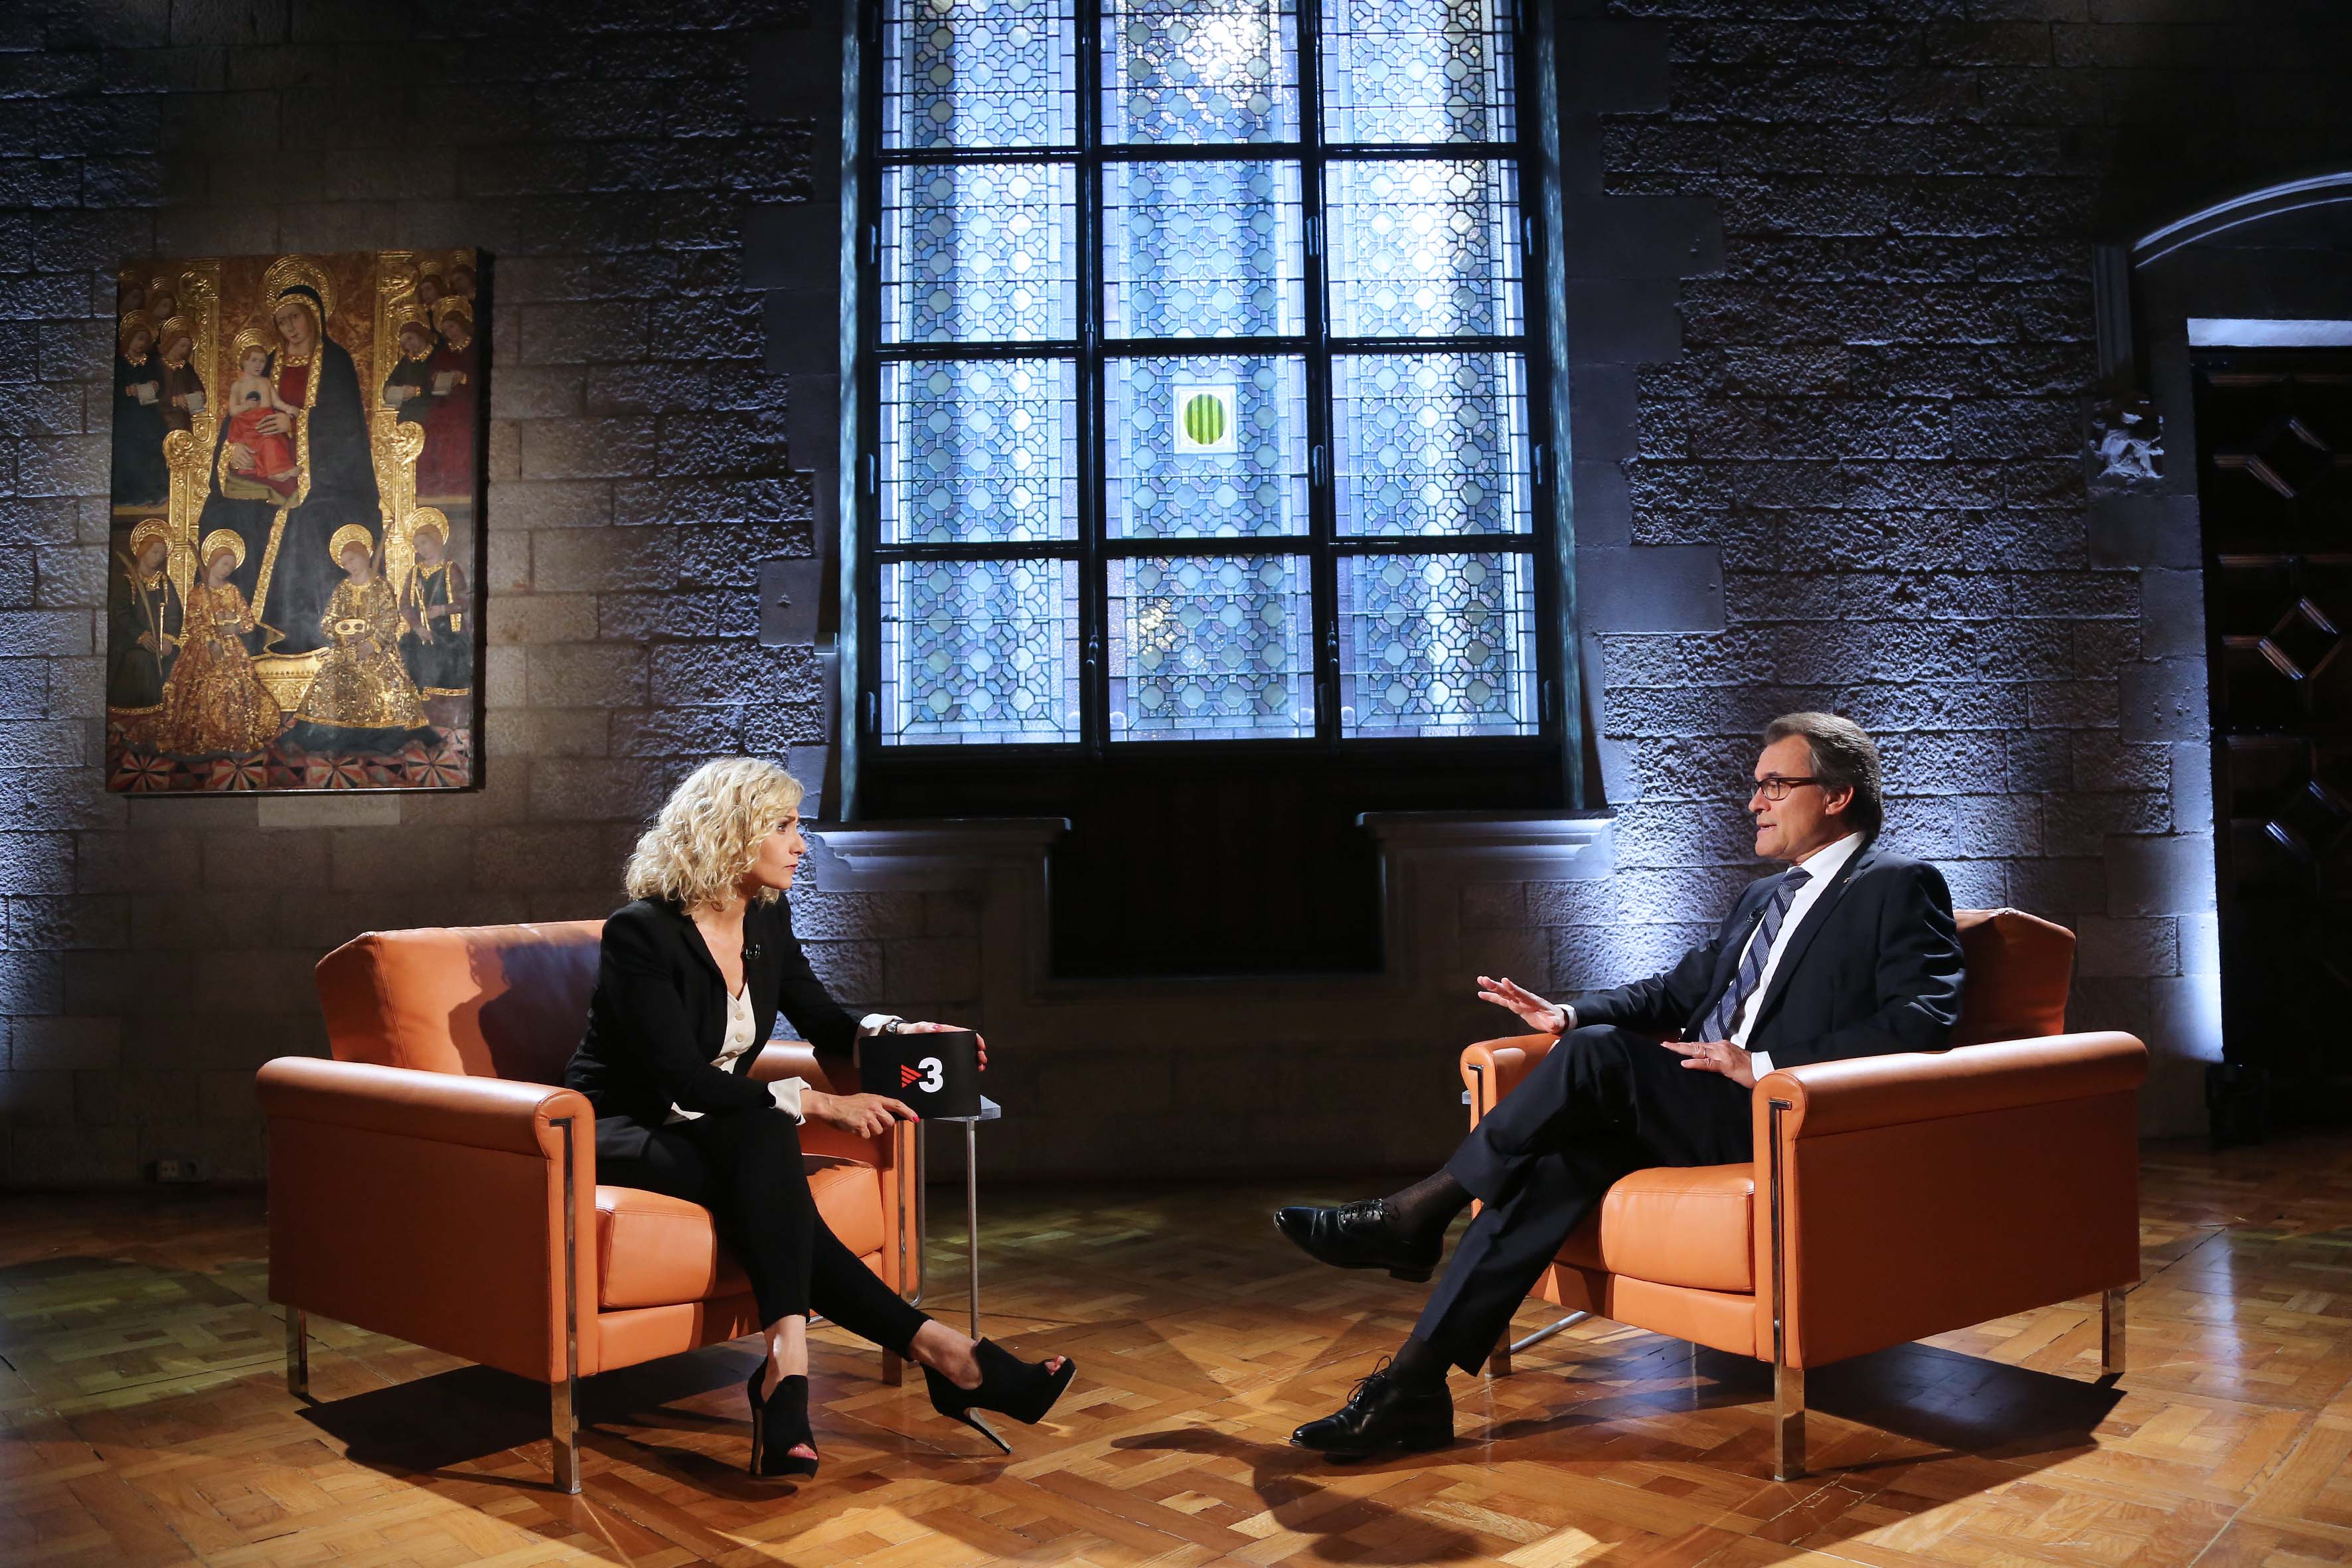 The Catalan President, Artur Mas, interviewed by Mònica Terribas (by Rubén Moreno)